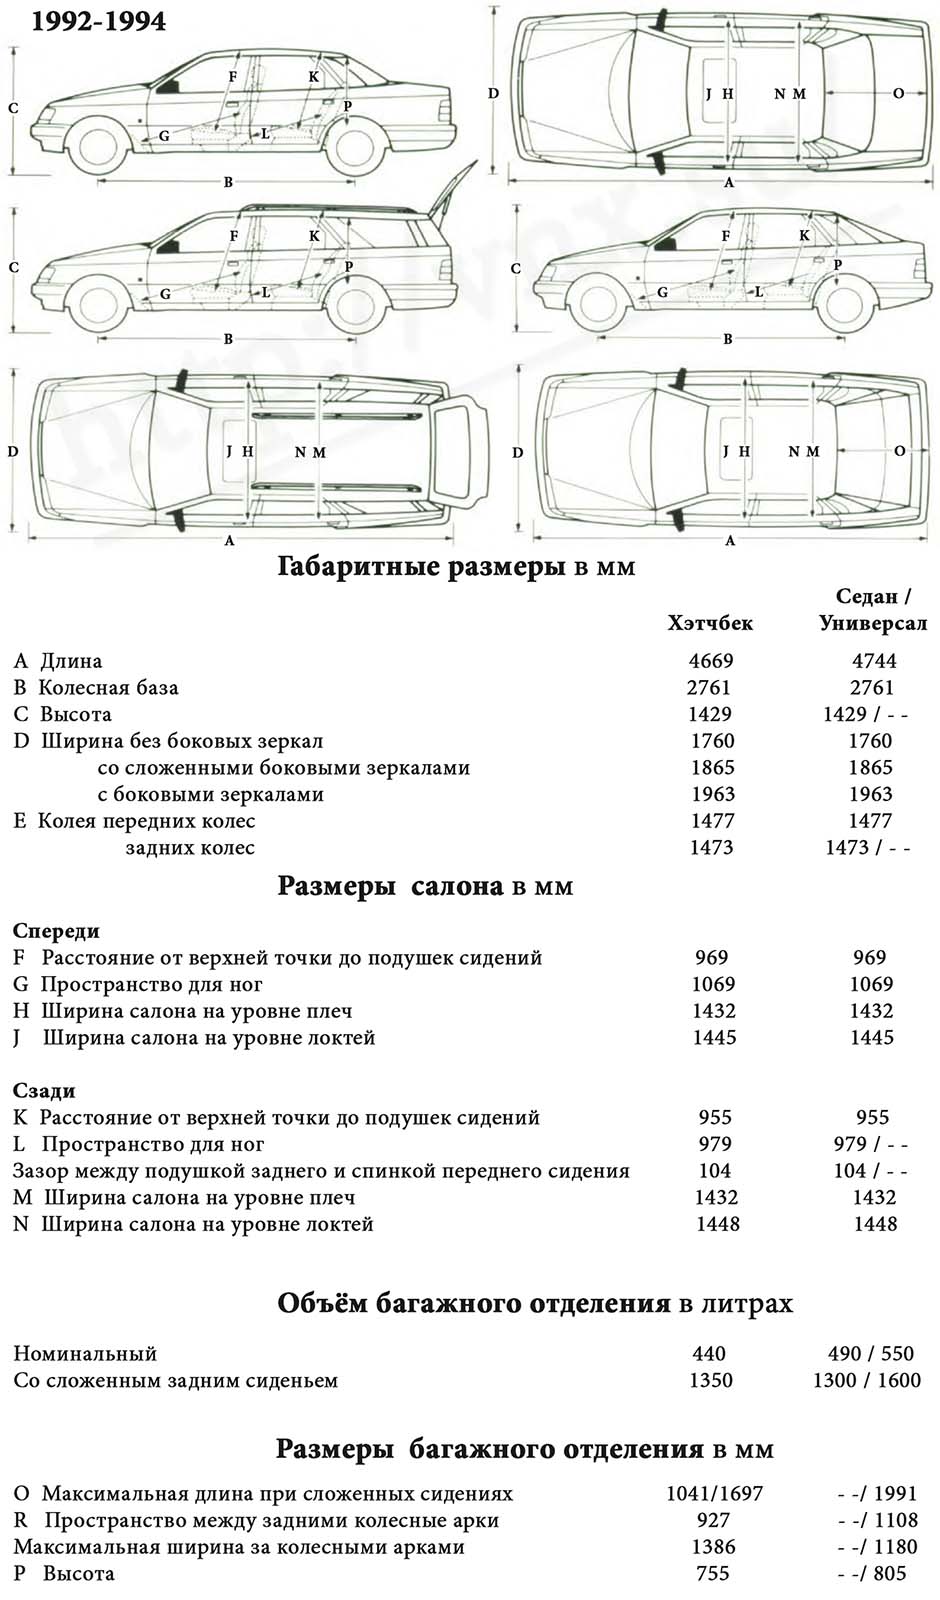 Габаритные размеры Форд Скорпио 1992-1994 (dimensions Ford Scorpio)